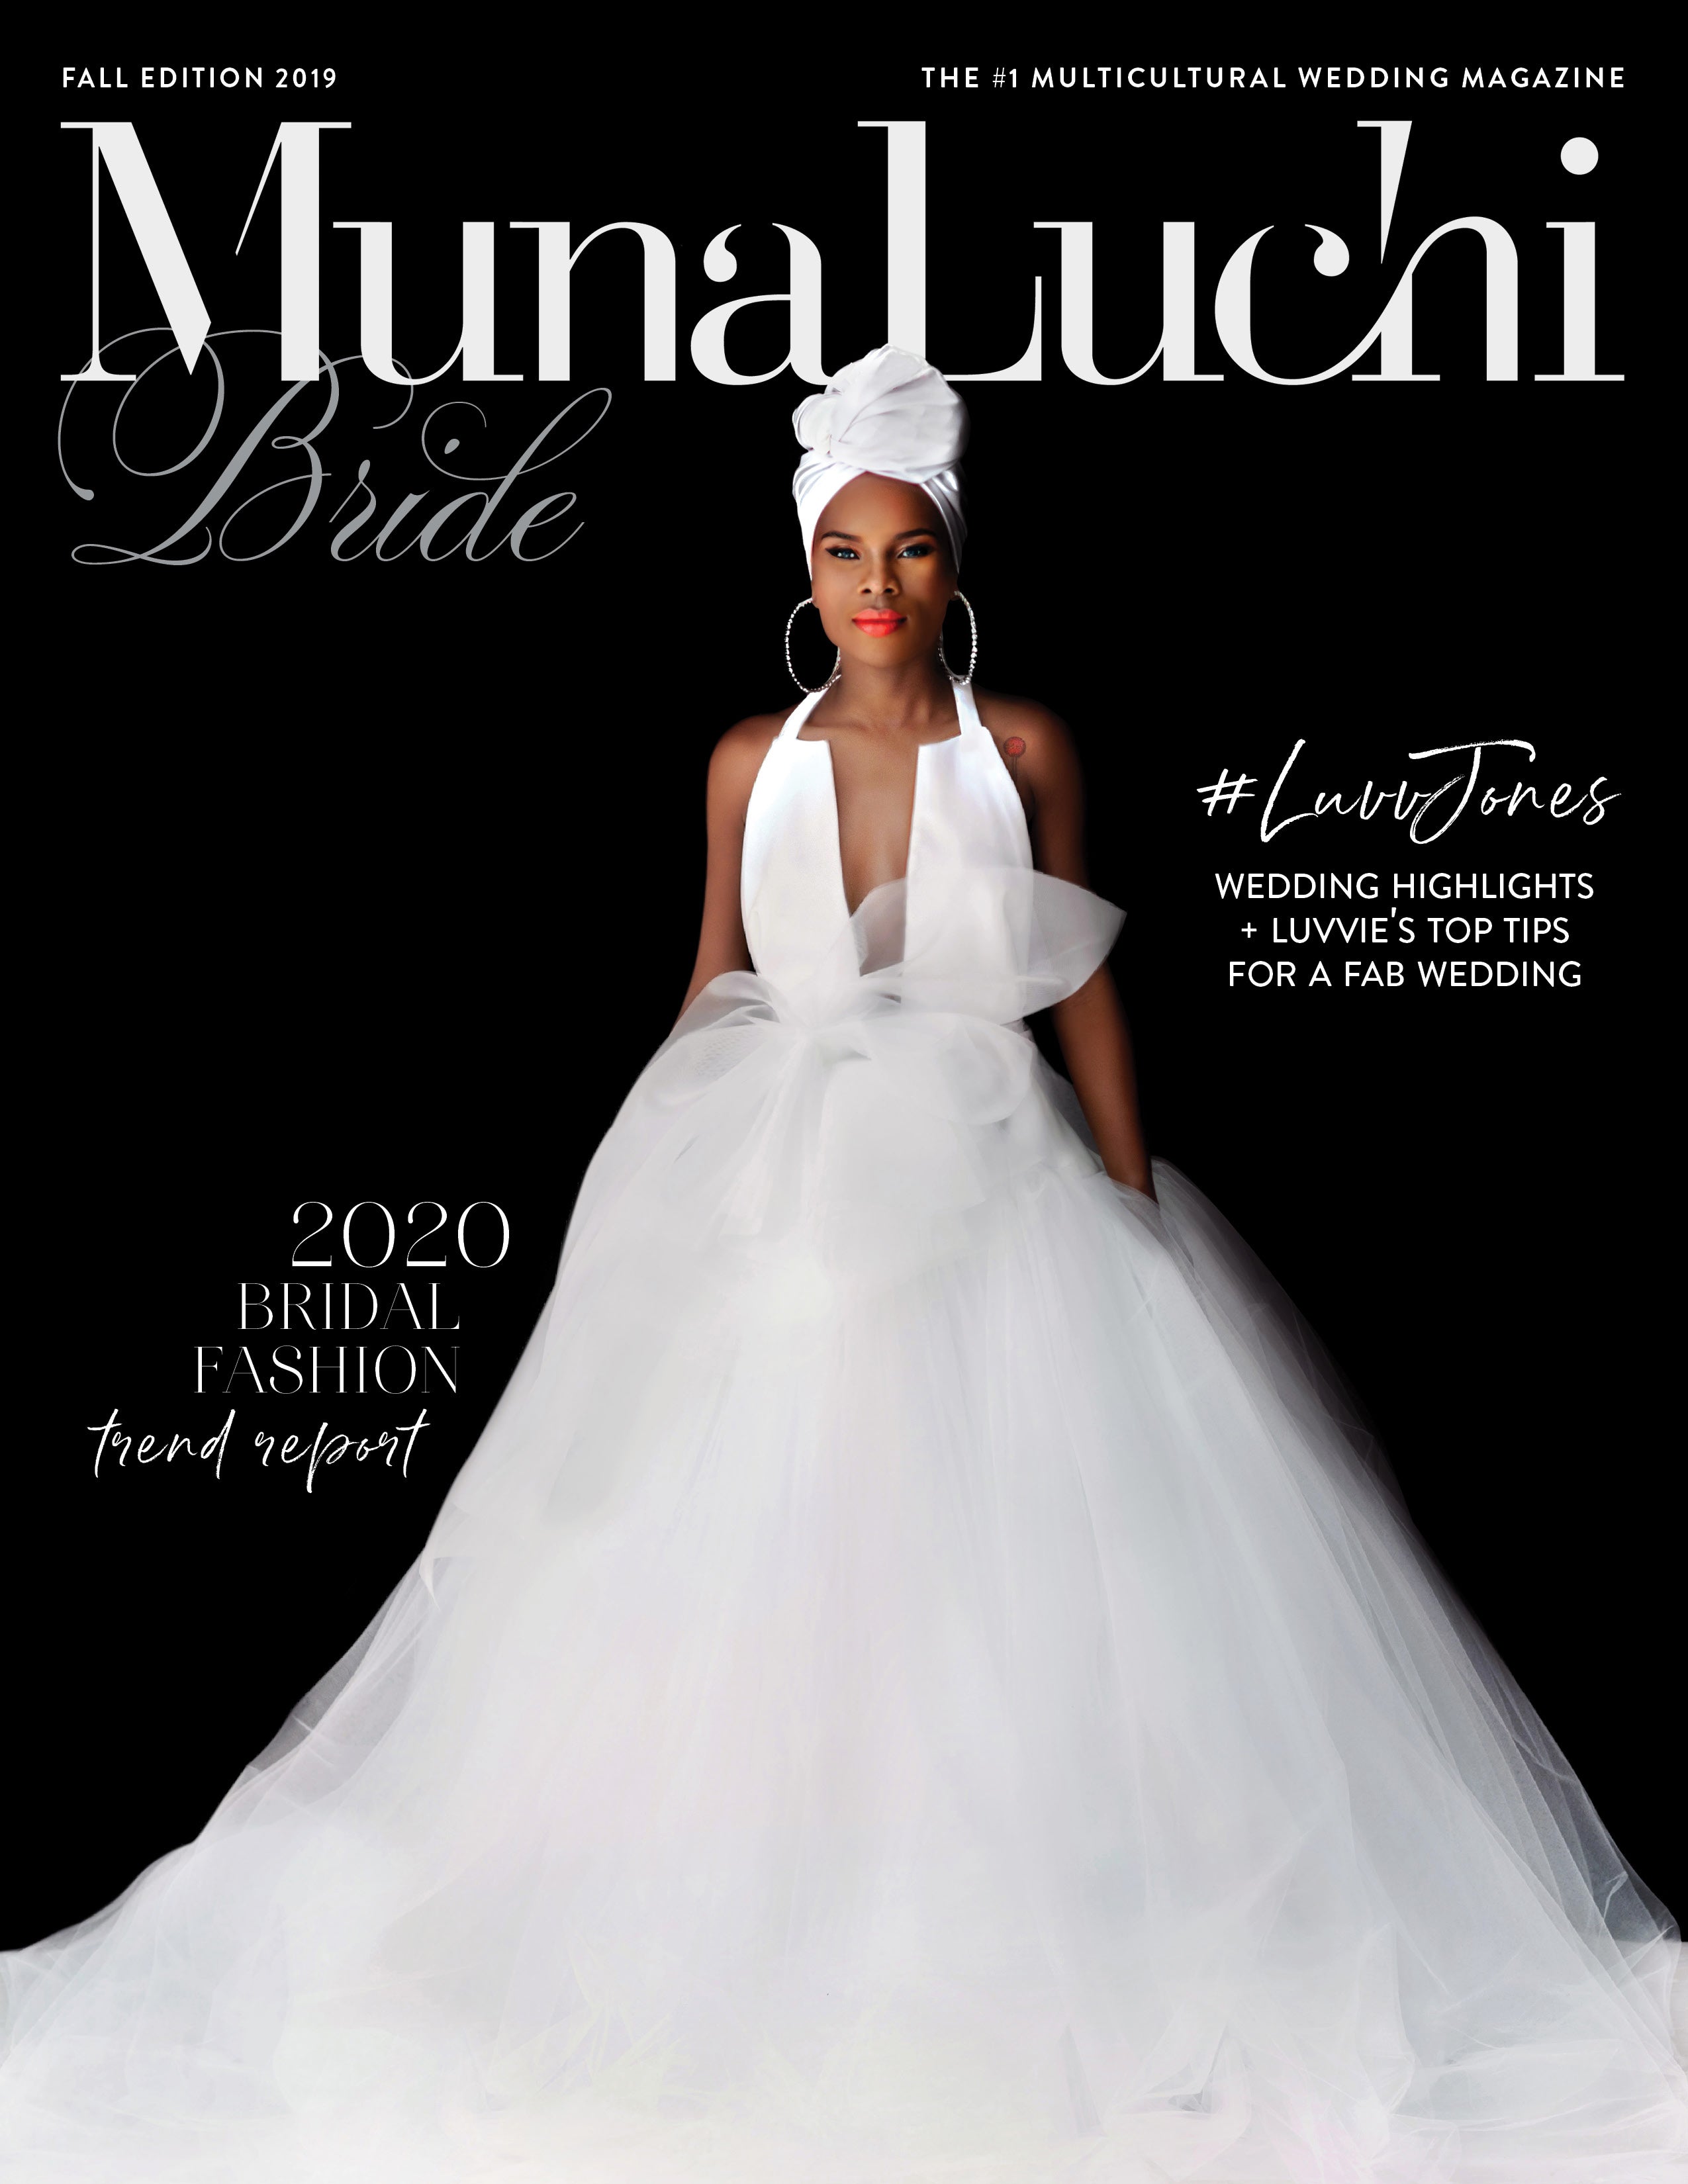 Multicultural Weddings African American Brides Black Brides